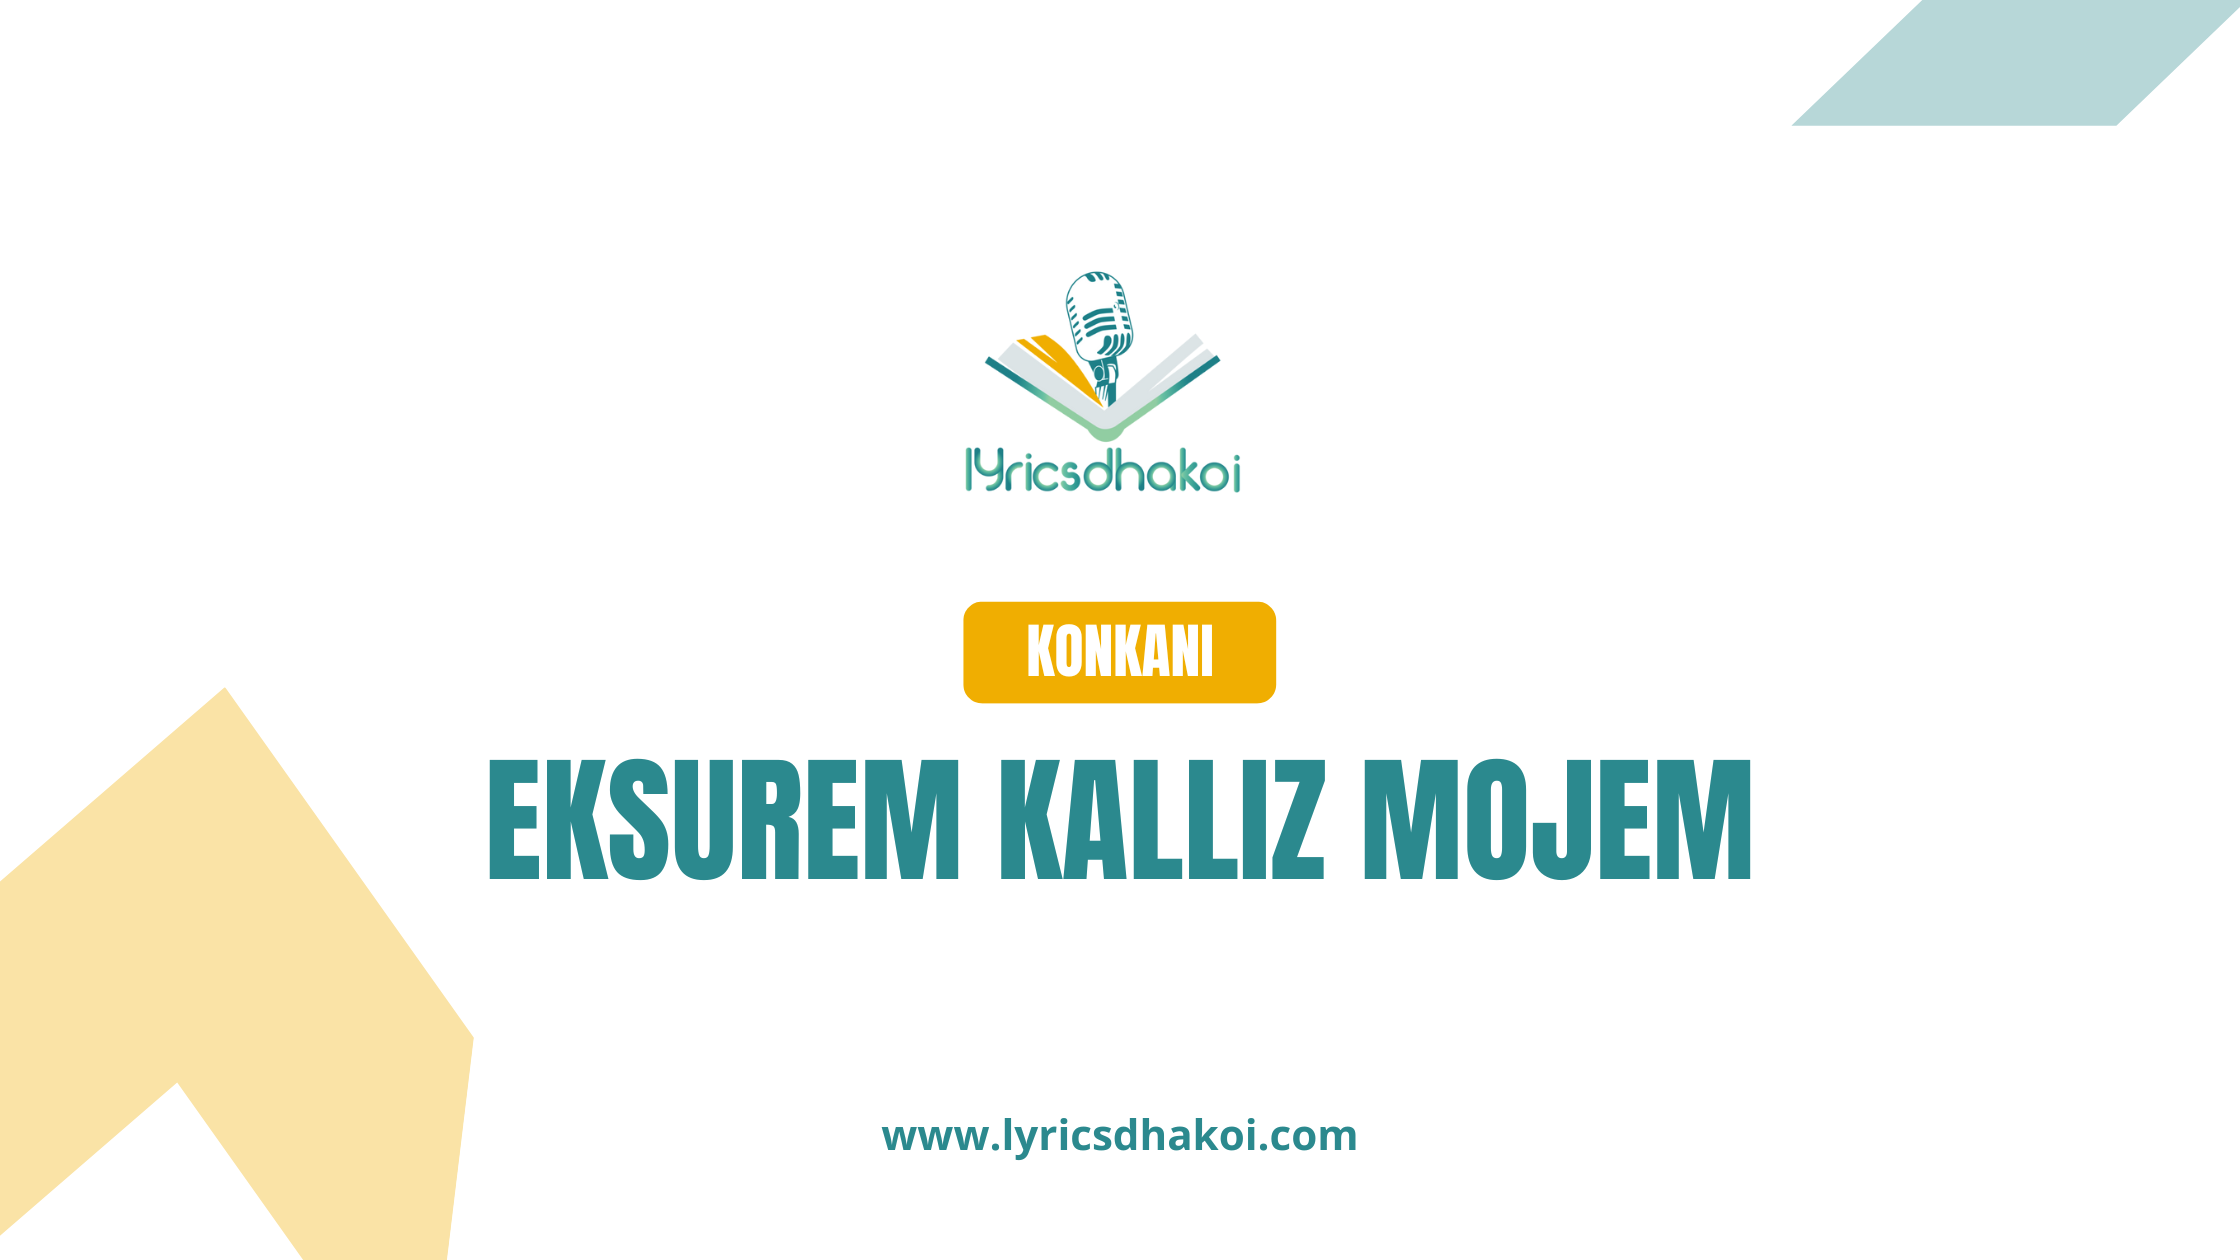 Eksurem Kalliz Mojem Konkani Lyrics for Karaoke Online - LyricsDhakoi.com